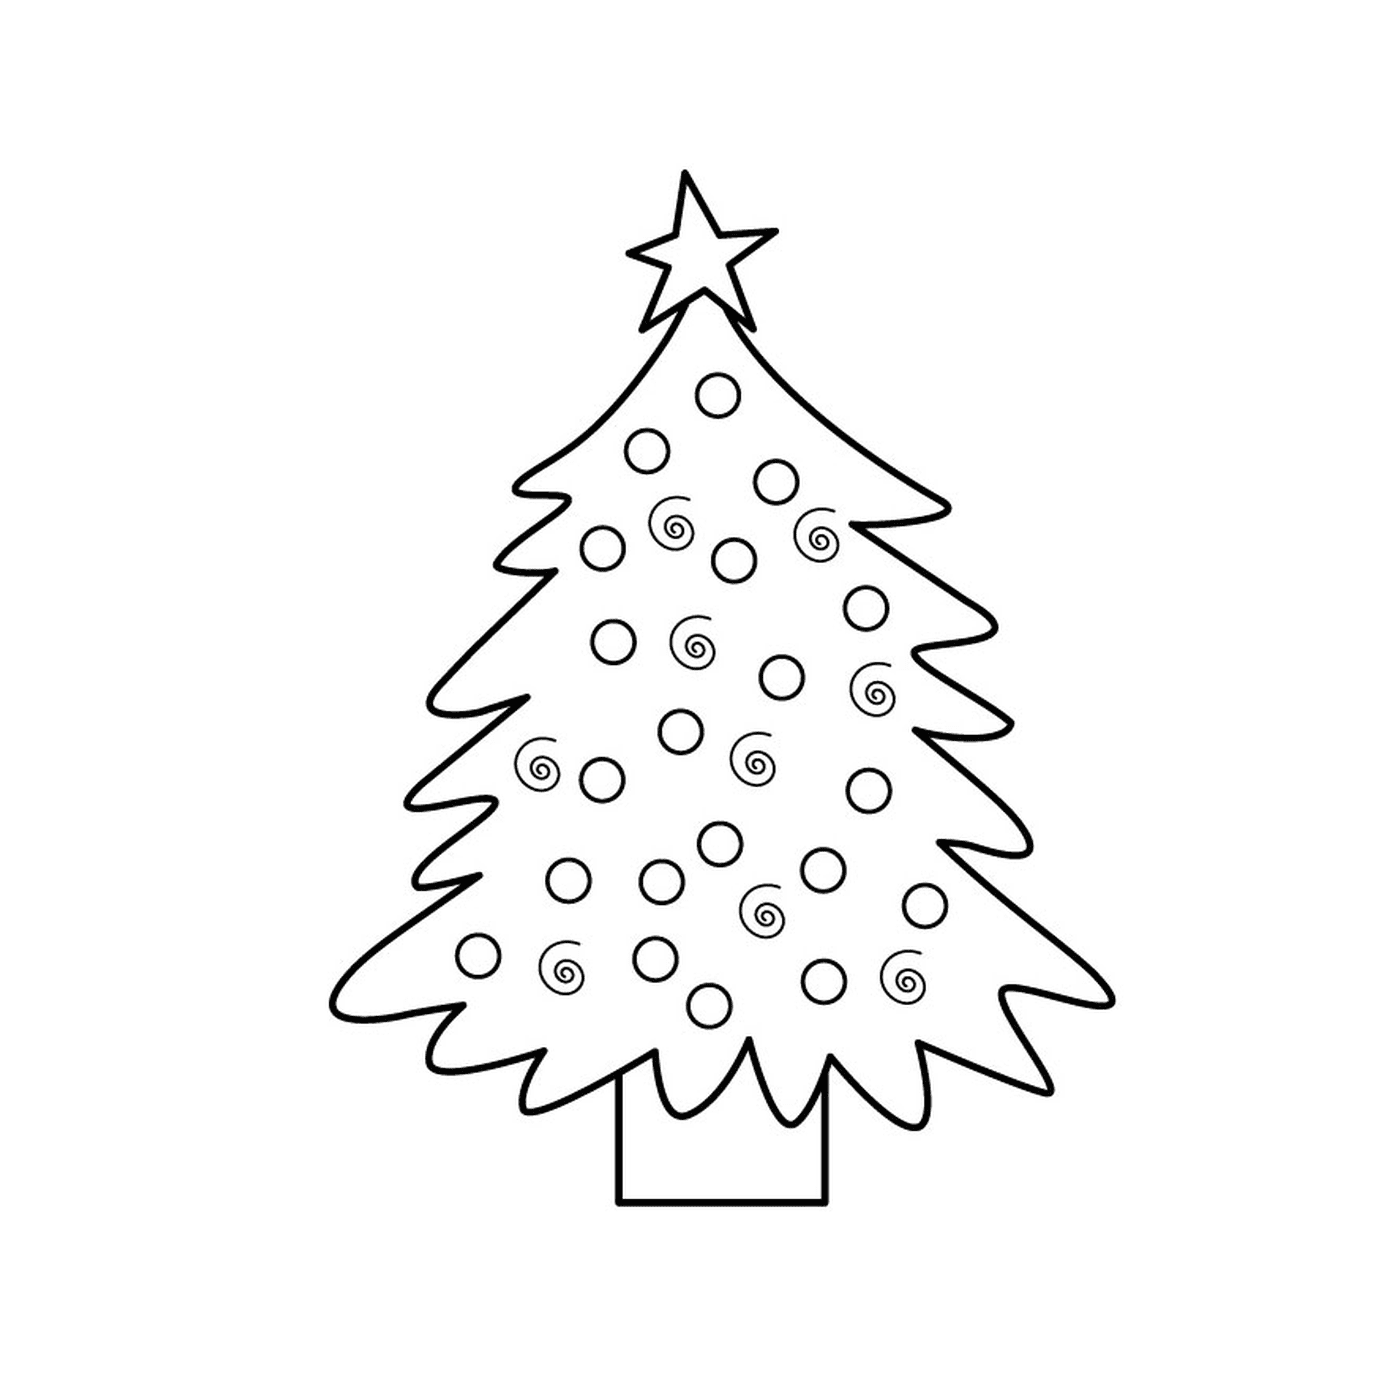  Big Christmas tree with a star 